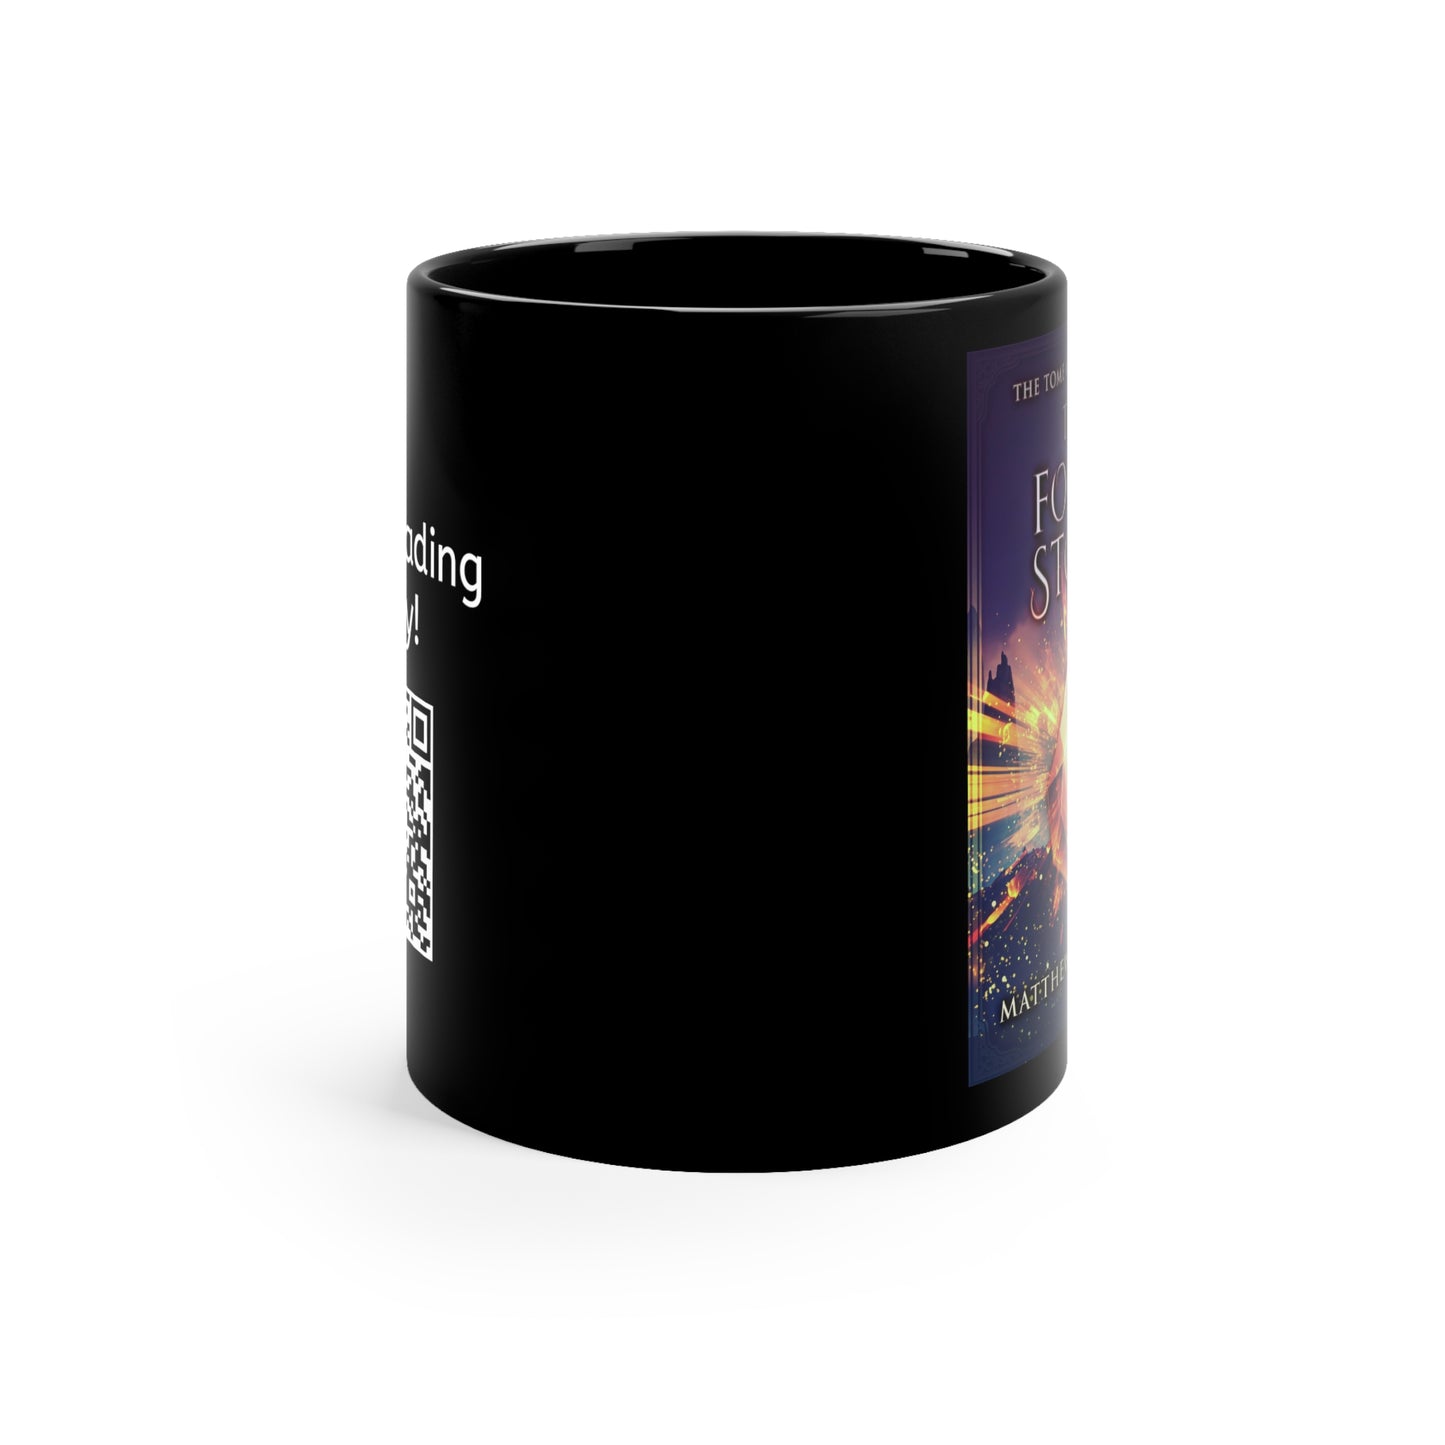 The Focus Stone - Black Coffee Mug